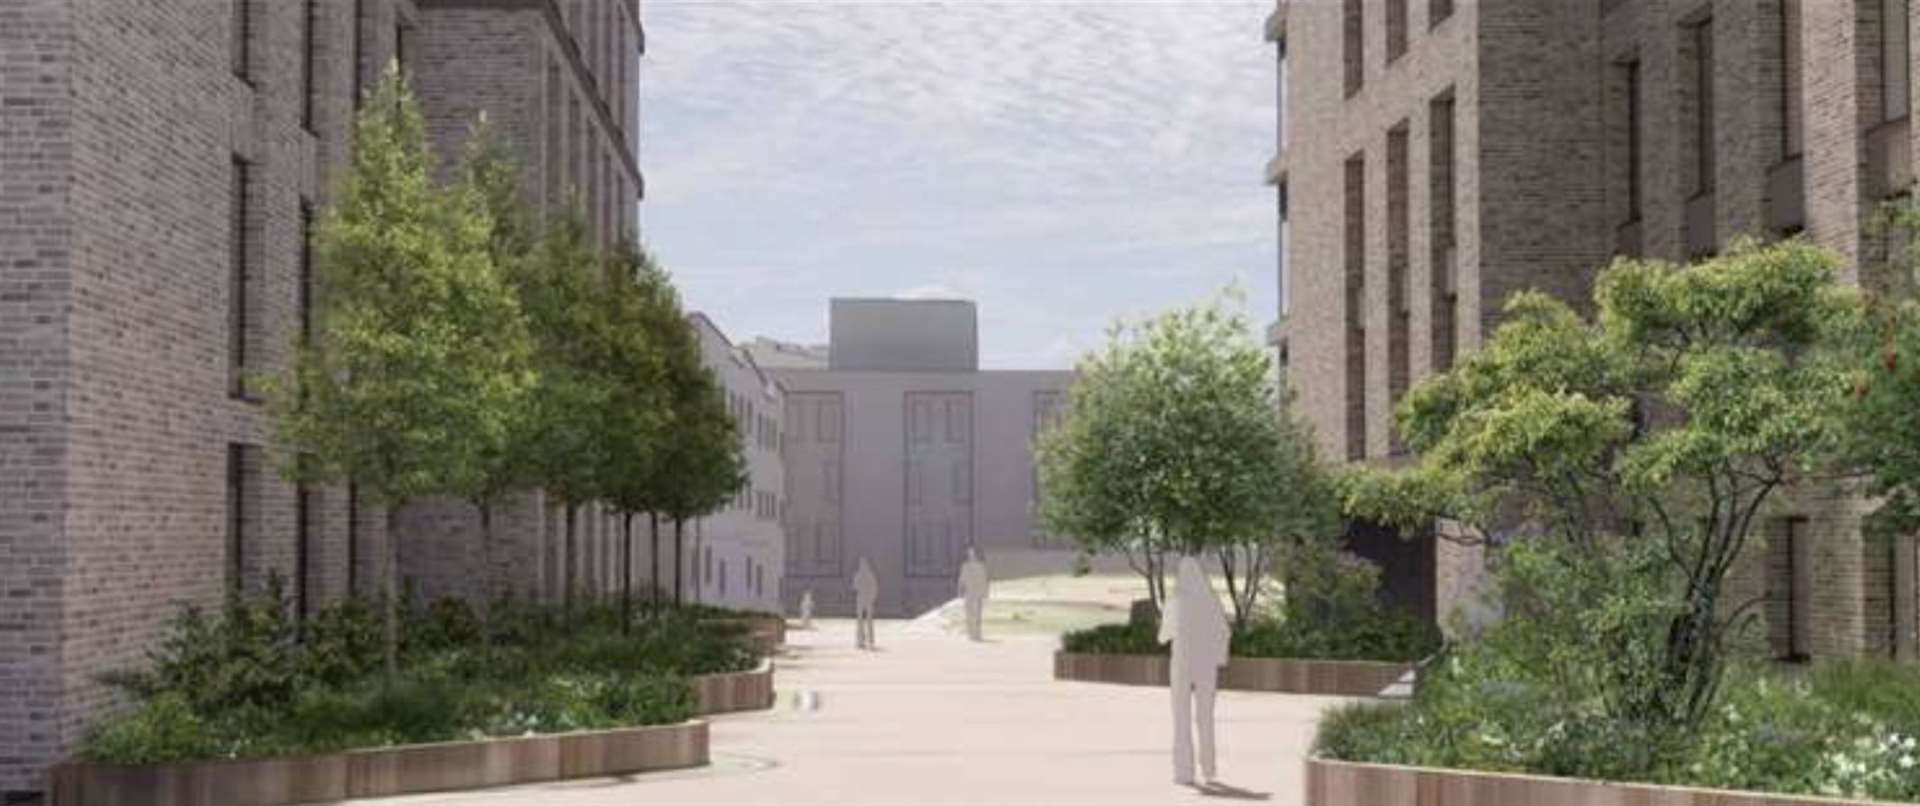 The Giles Lane development will be a car-free zone. Credit: UKC/St Edmund’s School